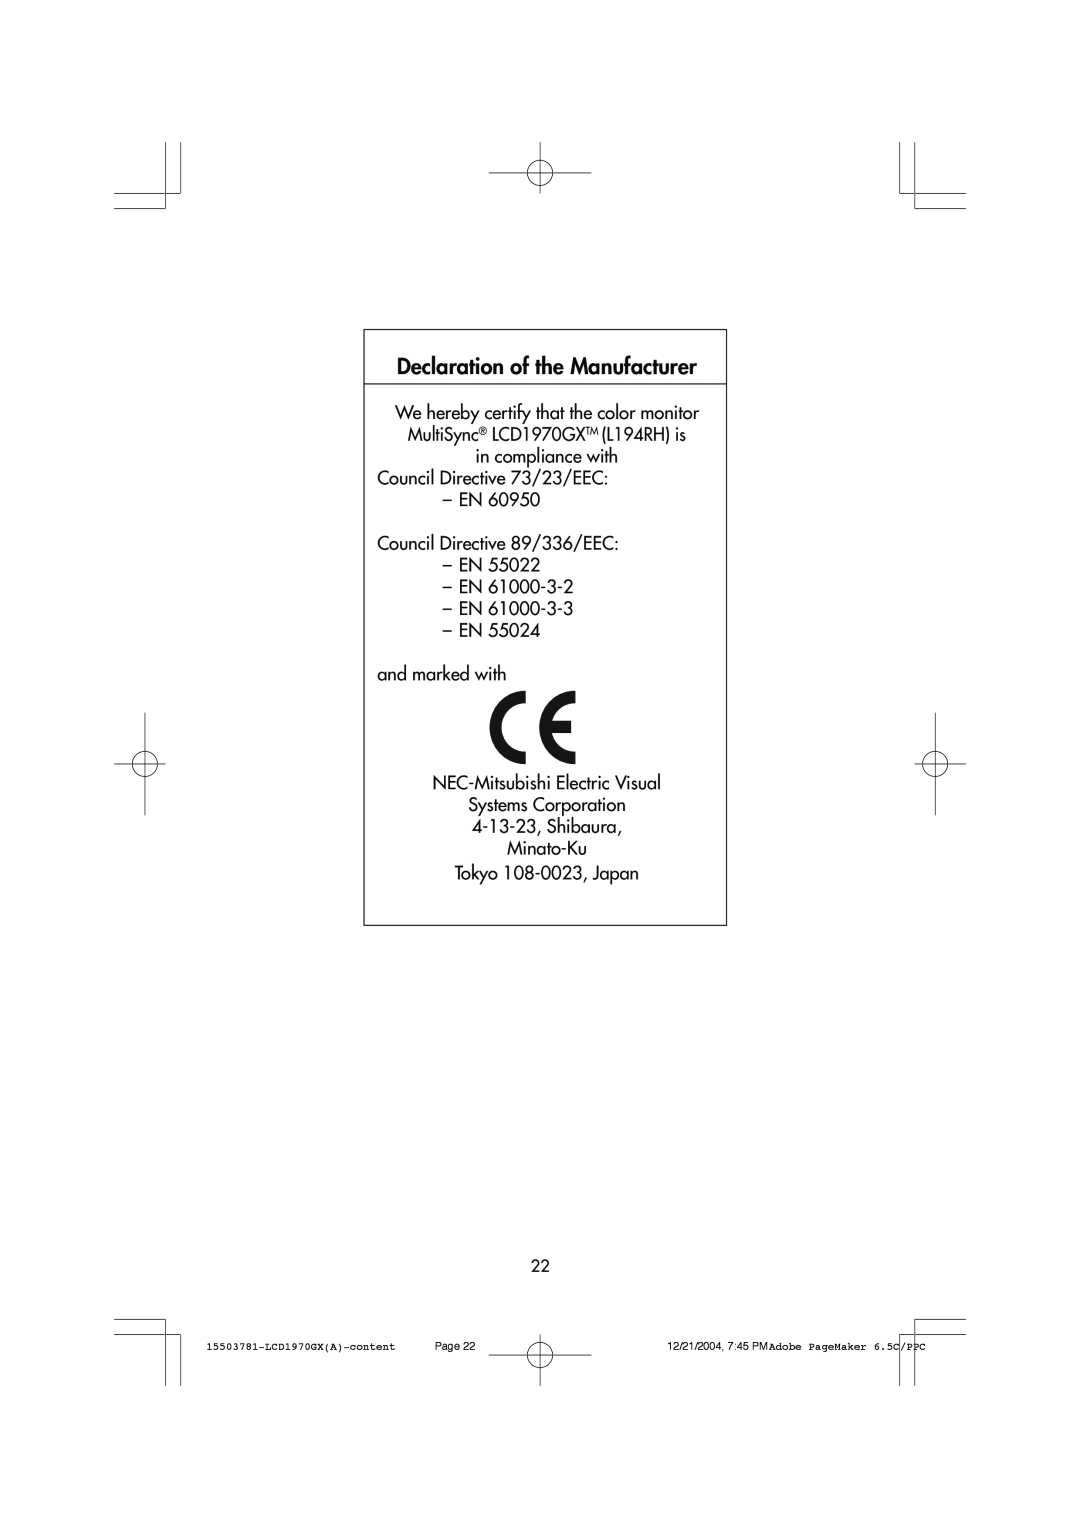 NEC LCD1970GX user manual Declaration of the Manufacturer, Council Directive 73/23/EEC Ð EN, Tokyo 108-0023,Japan, Page 